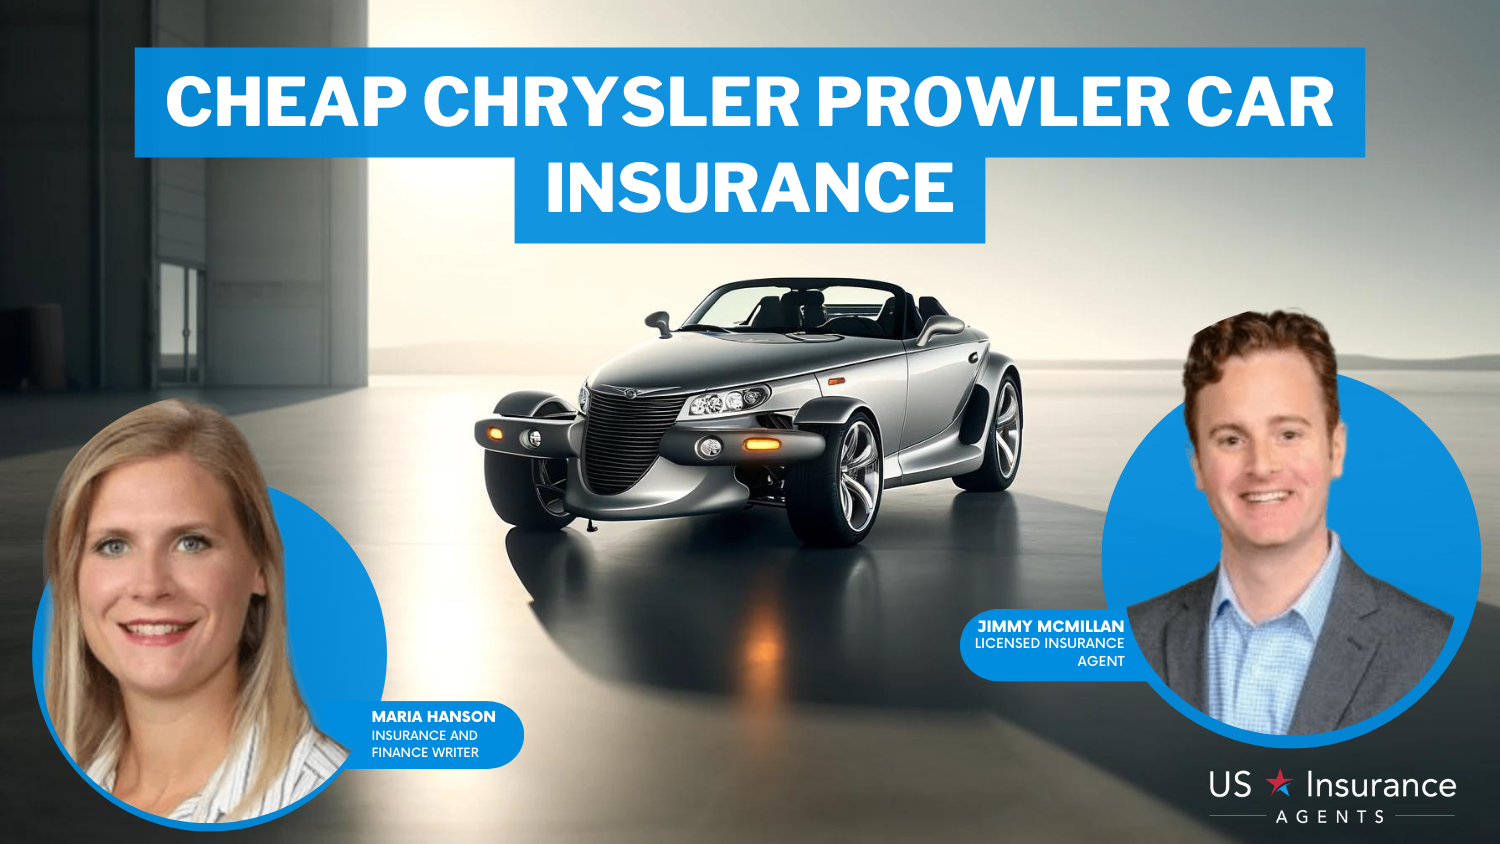 Cheap Chrysler Prowler Car Insurance: Erie, State Farm, and Progressive 